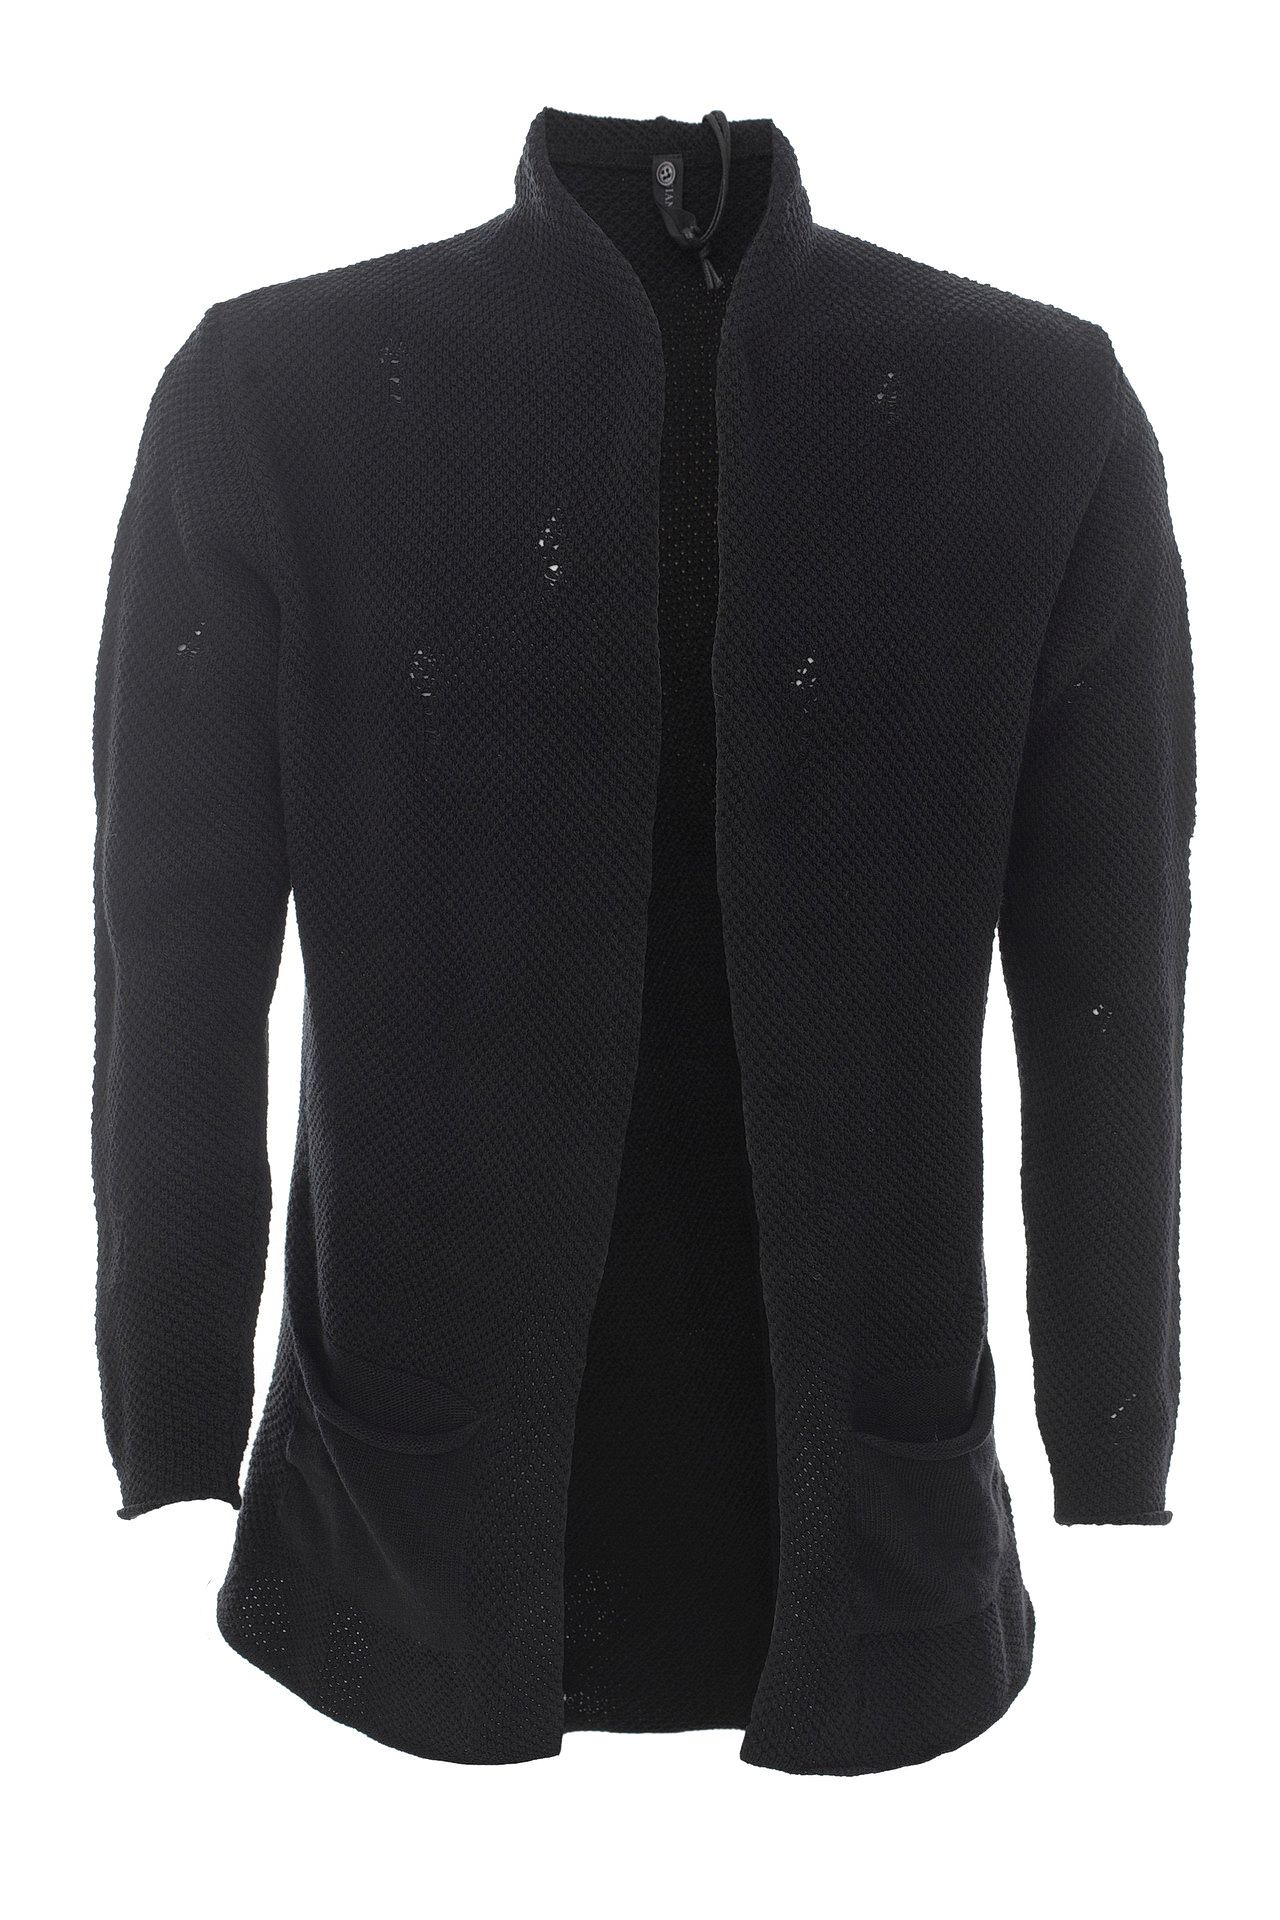 Одежда мужская Кардиган GIANNI LUPO (BW525/18.2). Купить за 4900 руб.